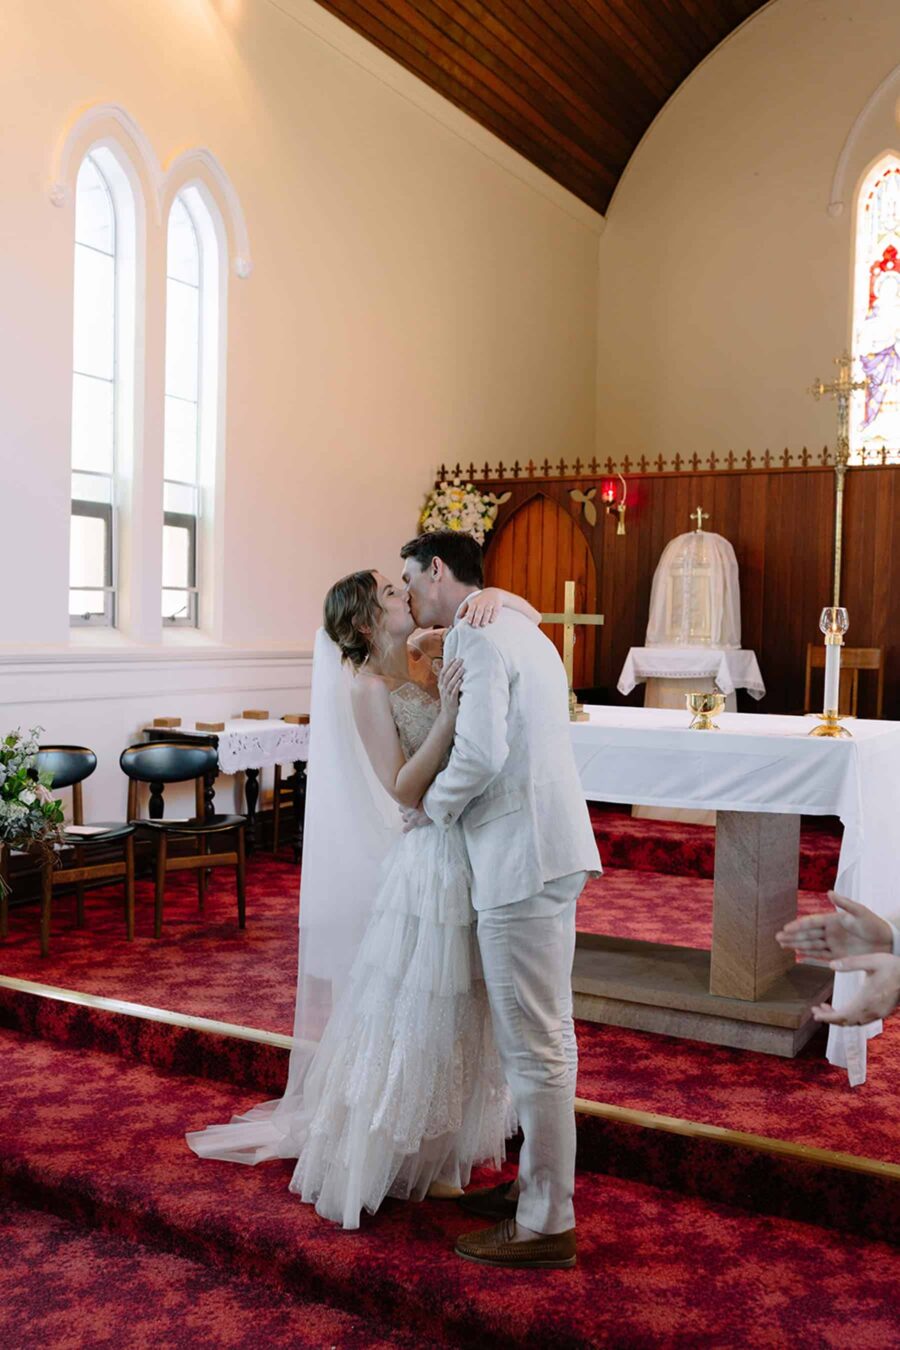 Catholic church wedding Maclean NSW